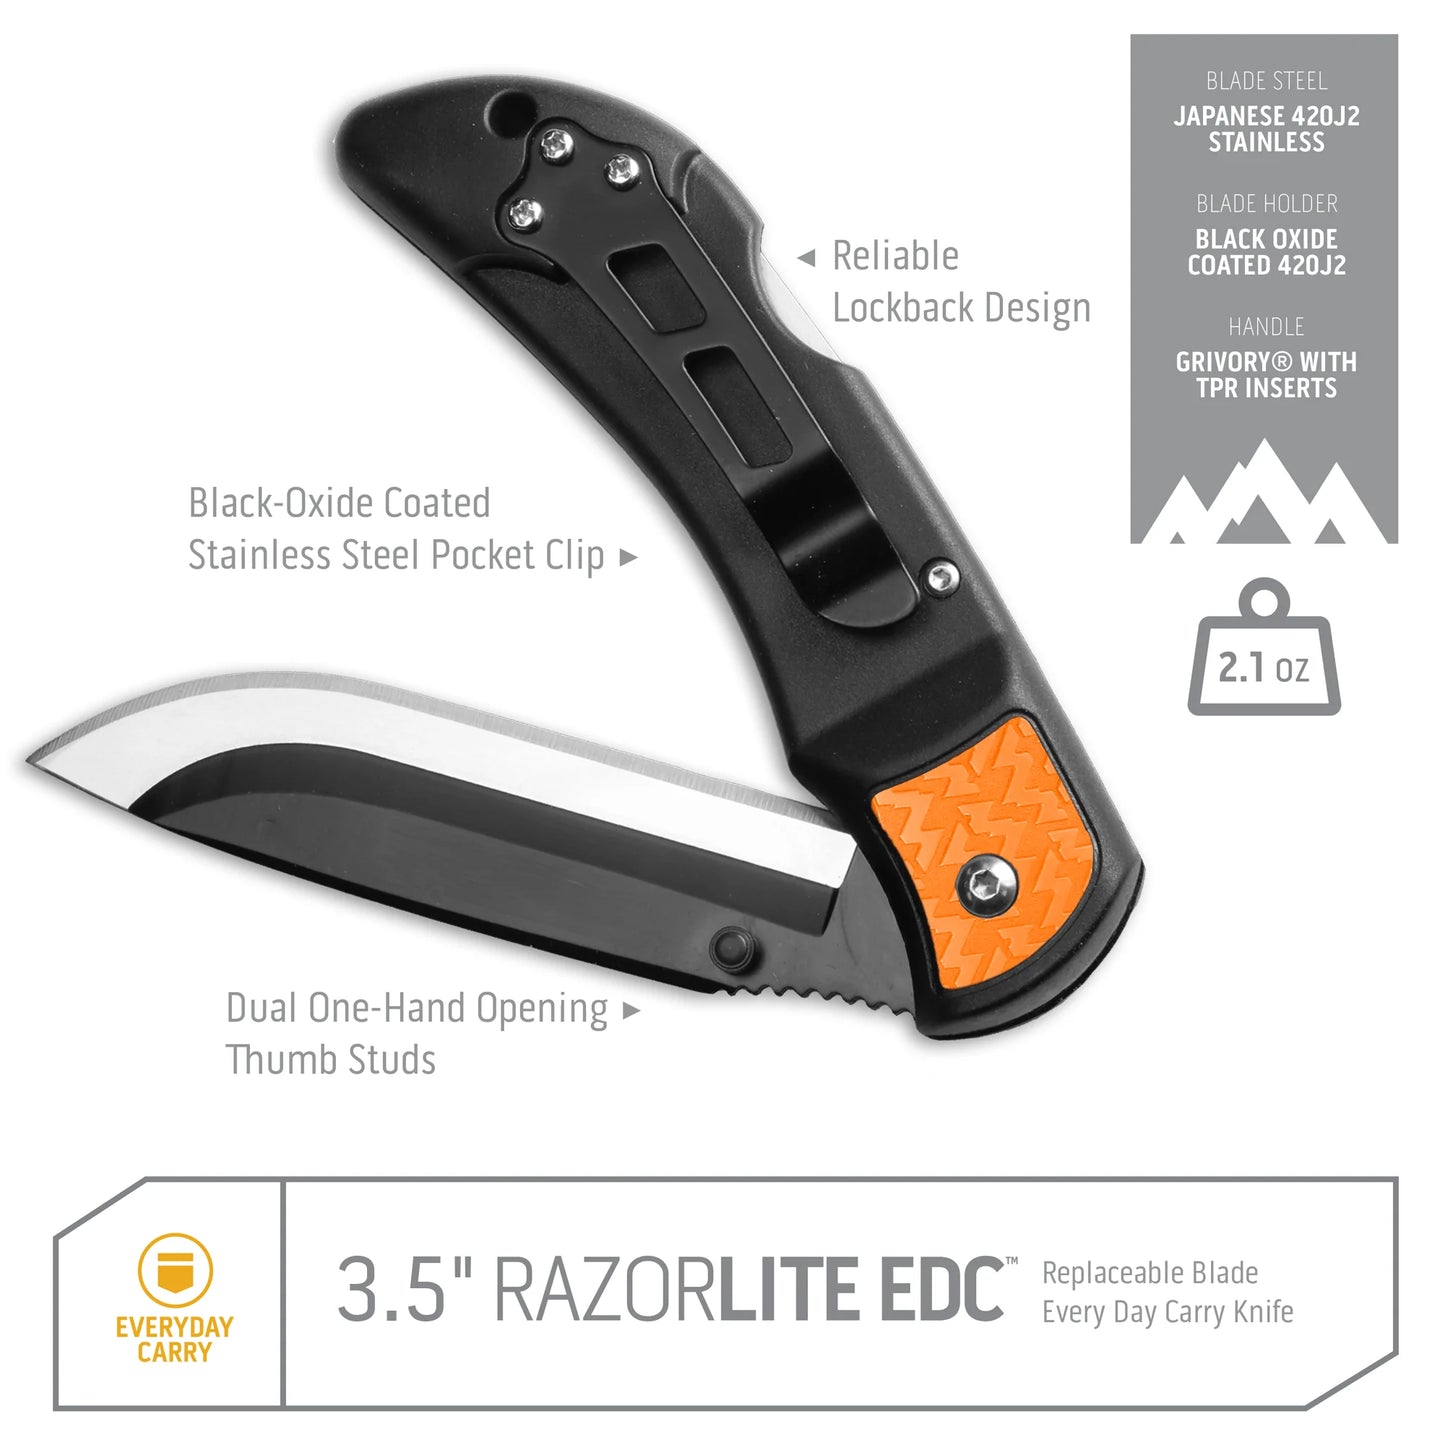 Outdoor Edge 3.5" Razor-EDC Lite Orange Knife